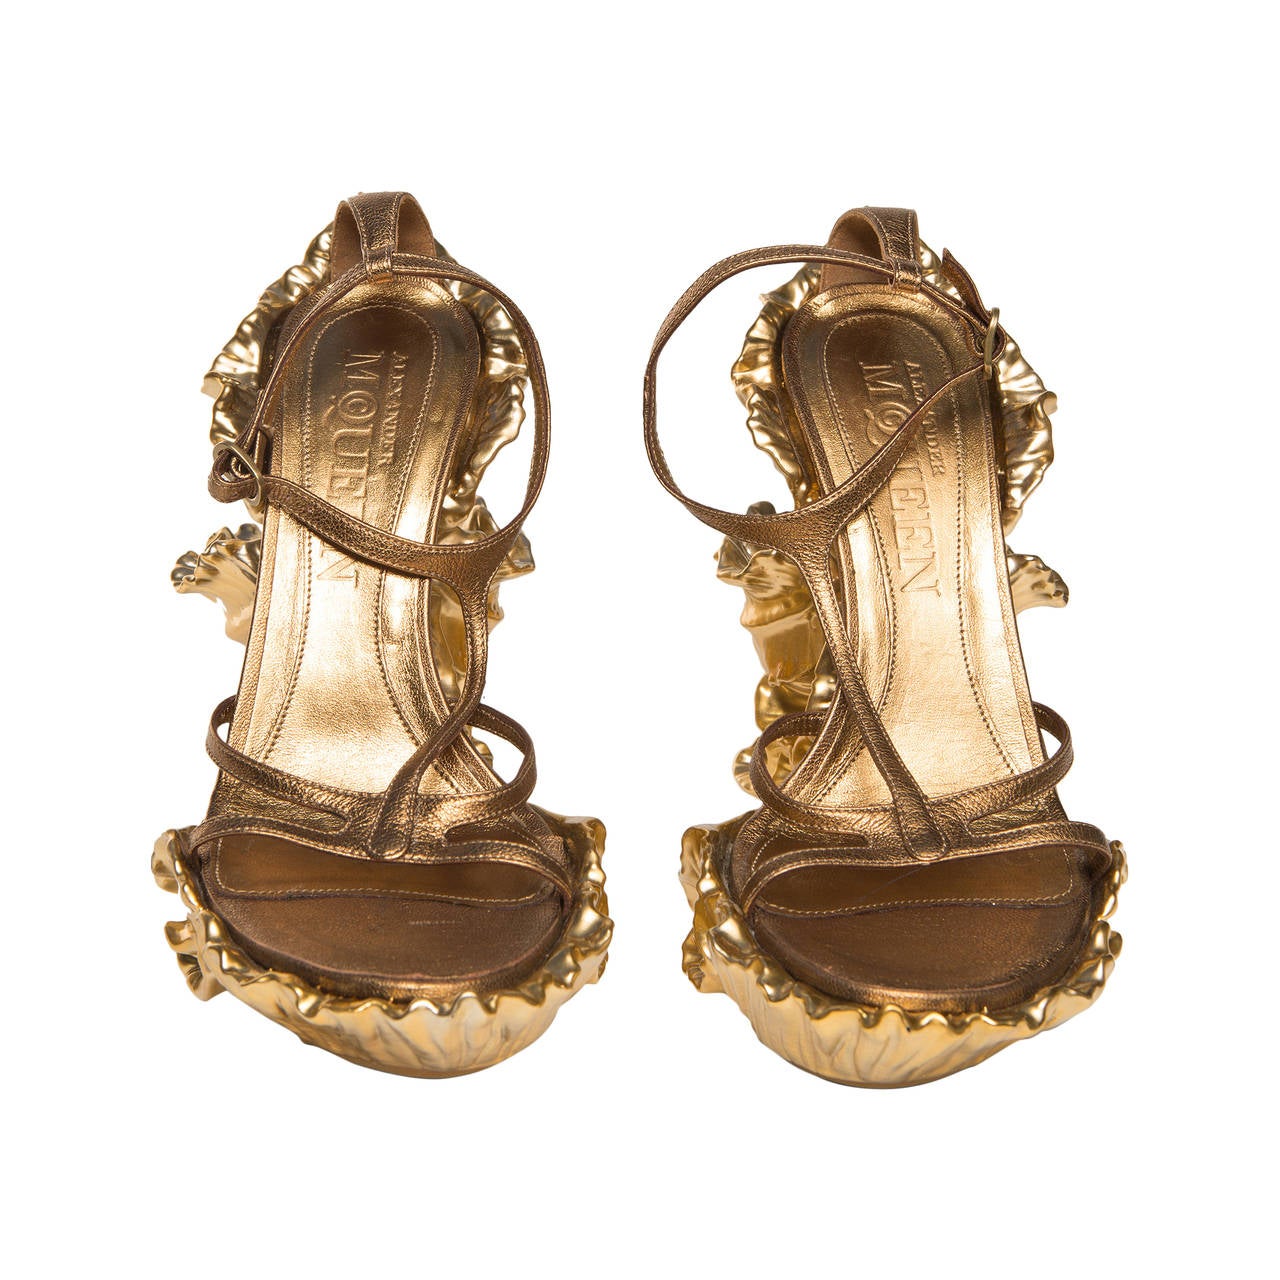 Alexander McQueen  sculpted gold shoes with wedge heel.